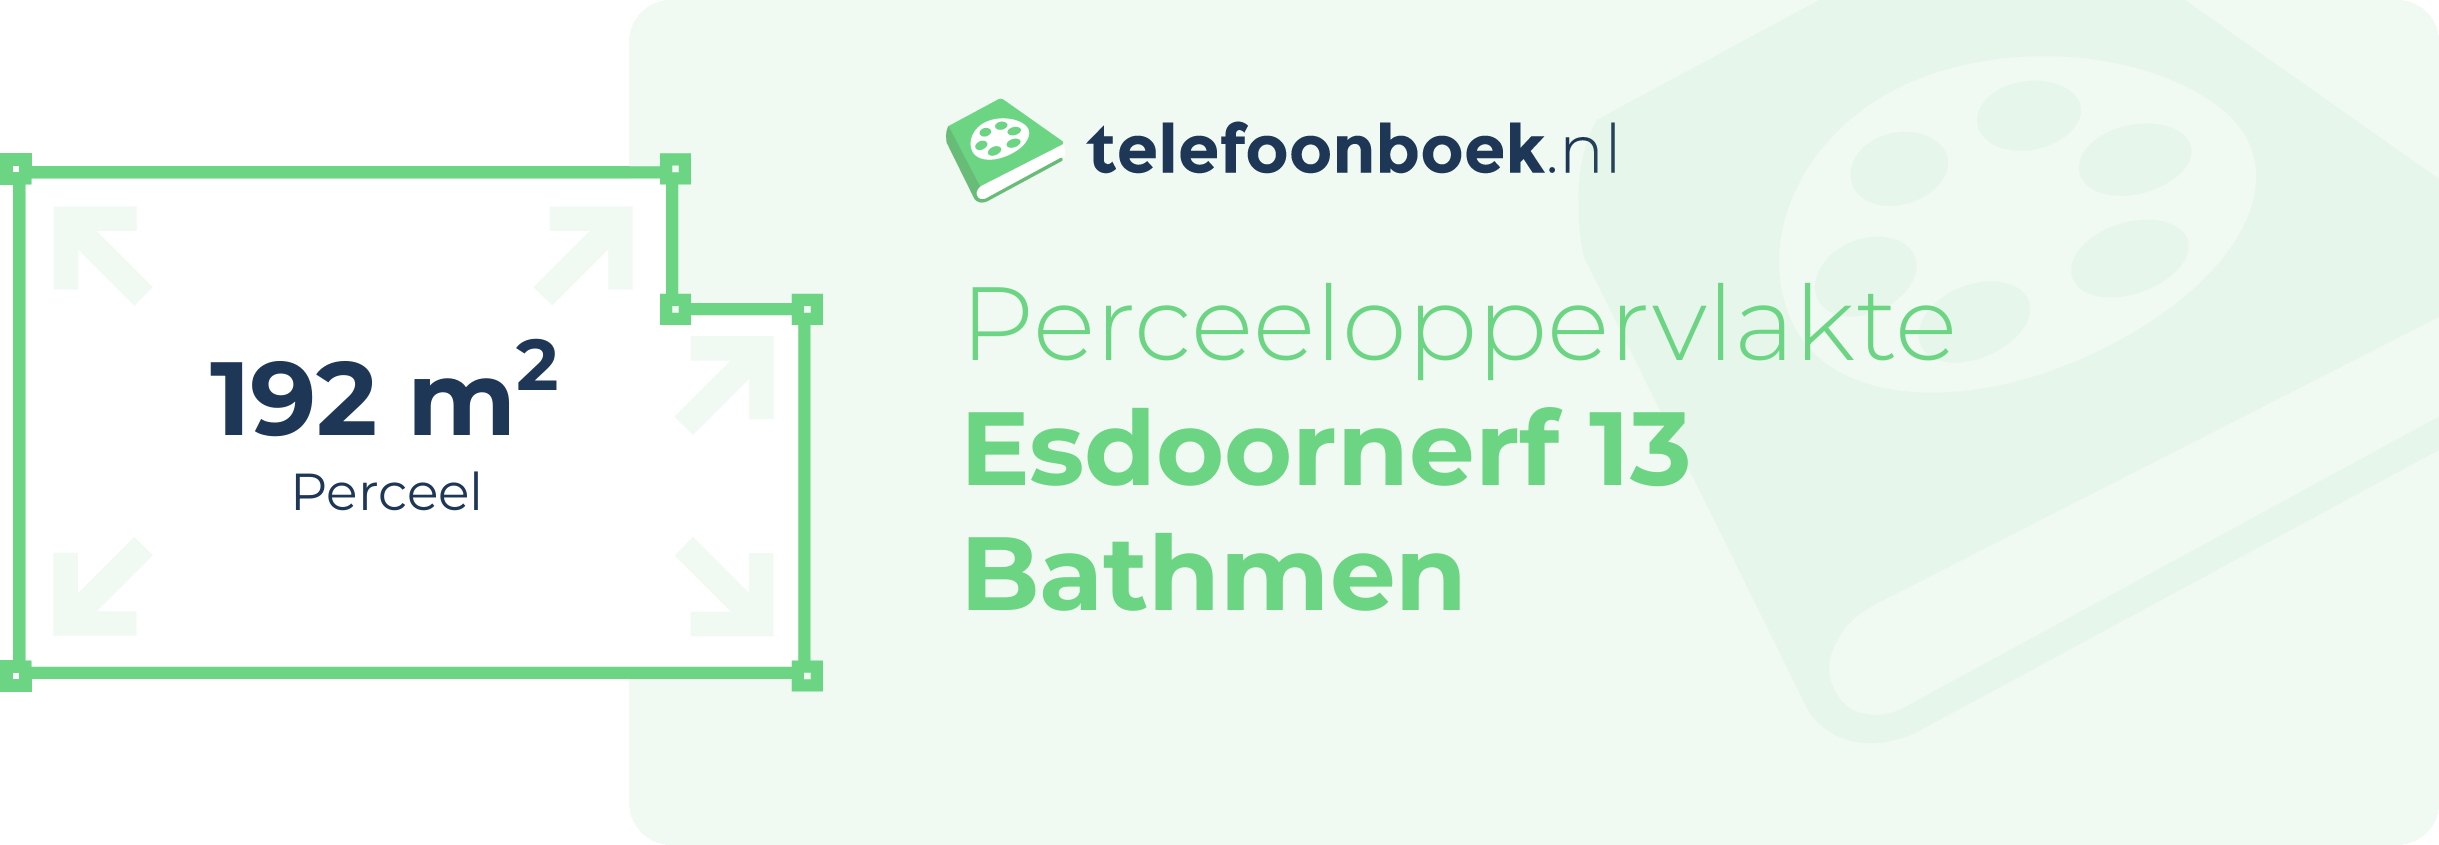 Perceeloppervlakte Esdoornerf 13 Bathmen